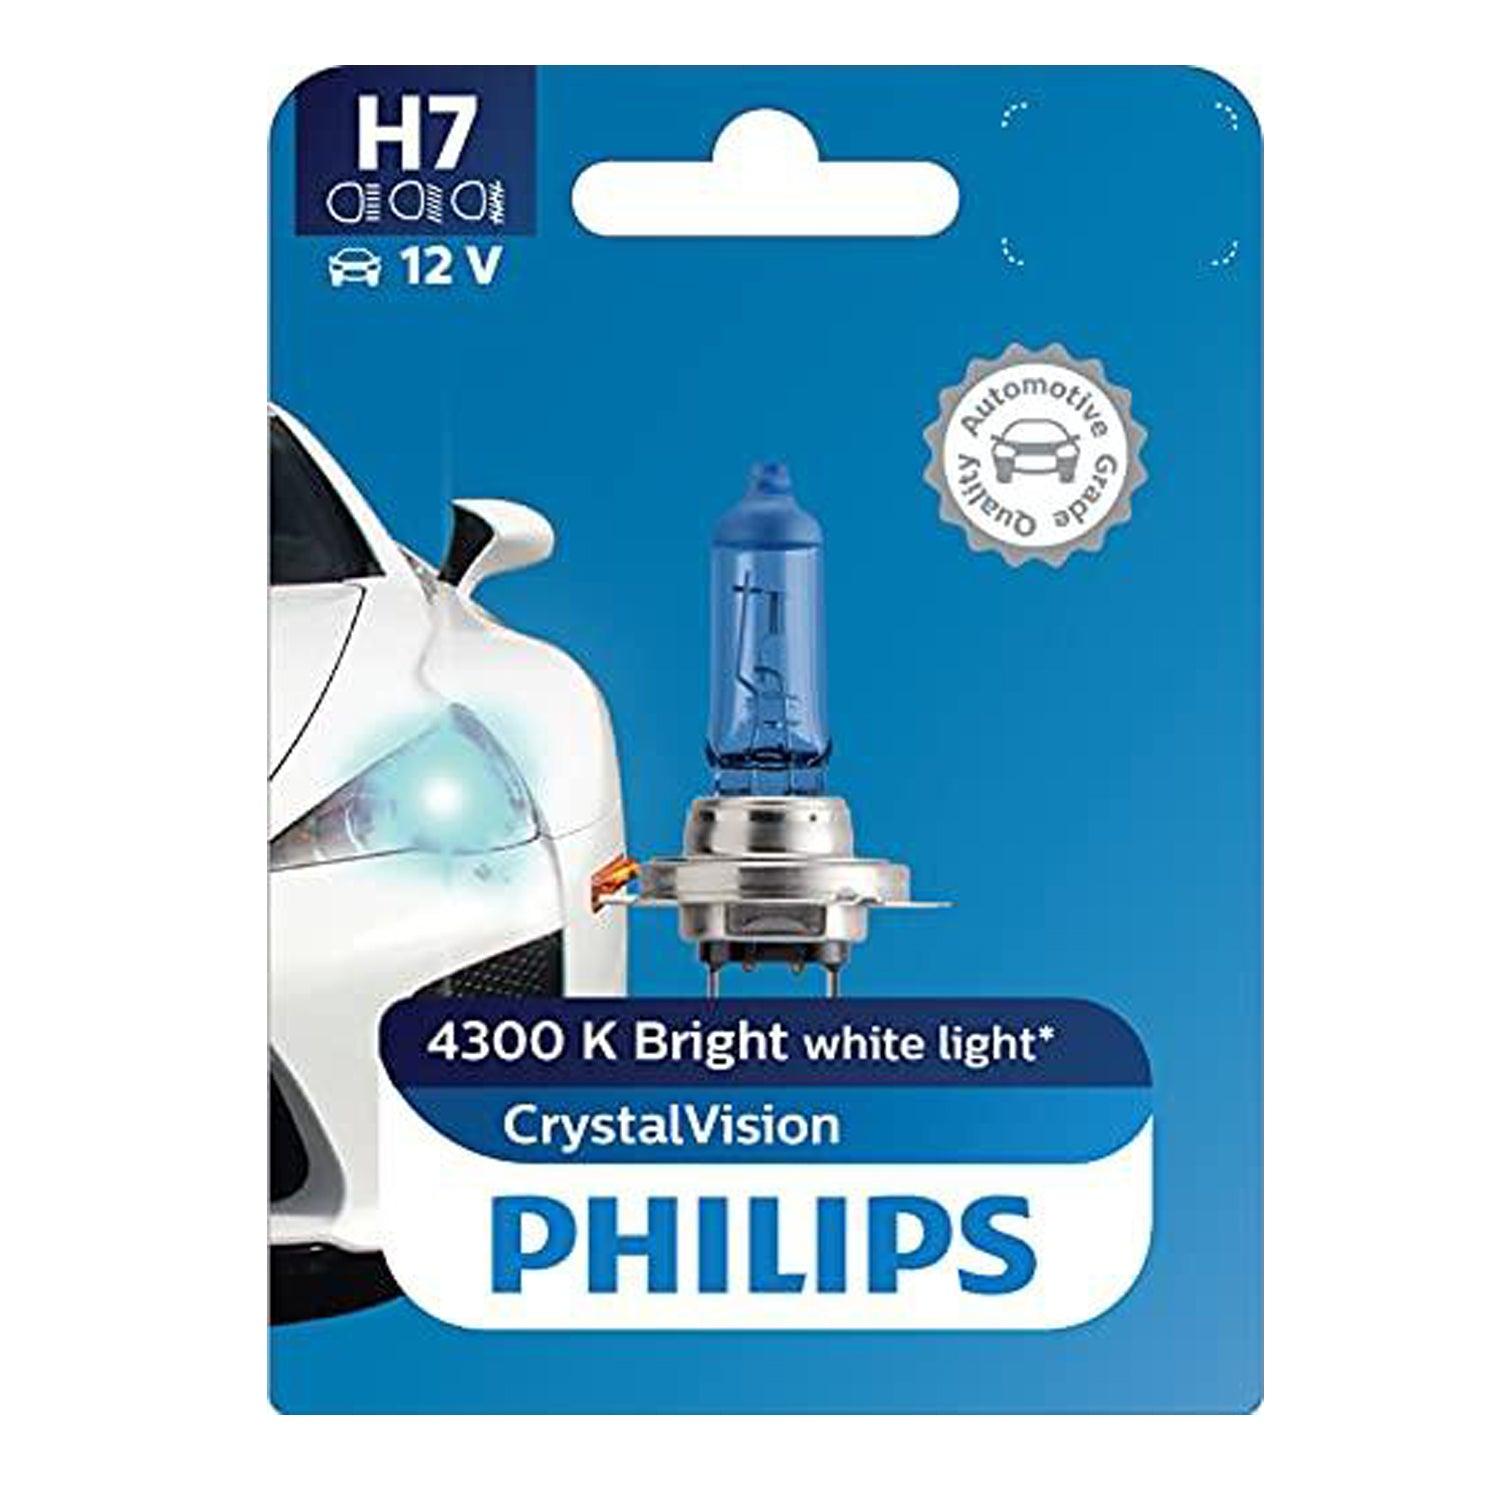 Philips H7 12972 Standard Halogen Headlight Automotive lamp bulb - Pack of 1